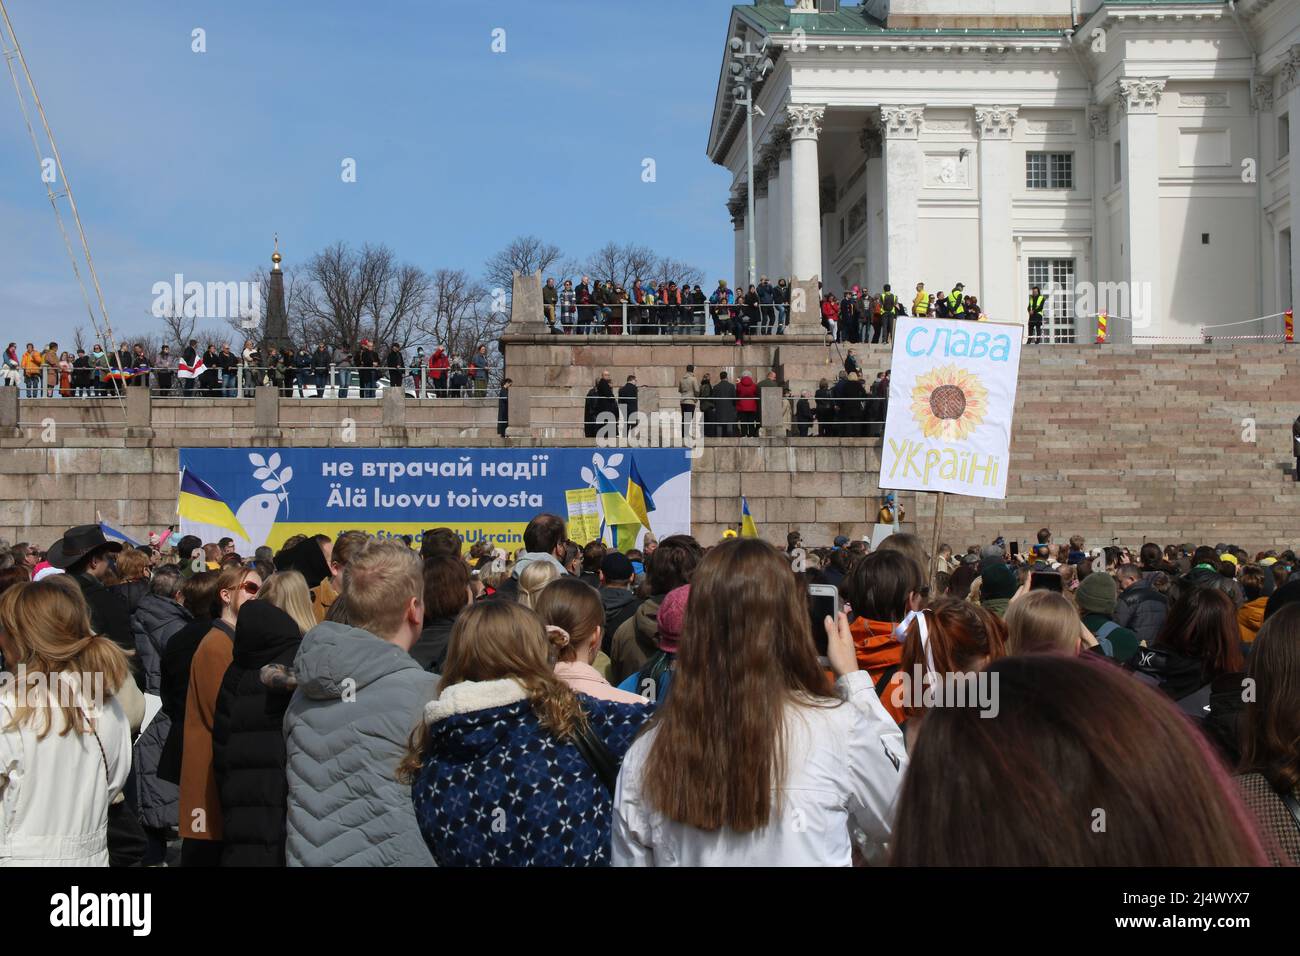 We stand with Ukraine demonstration at Senate square, Helsinki, Finland, 18.4.2022 Stock Photo